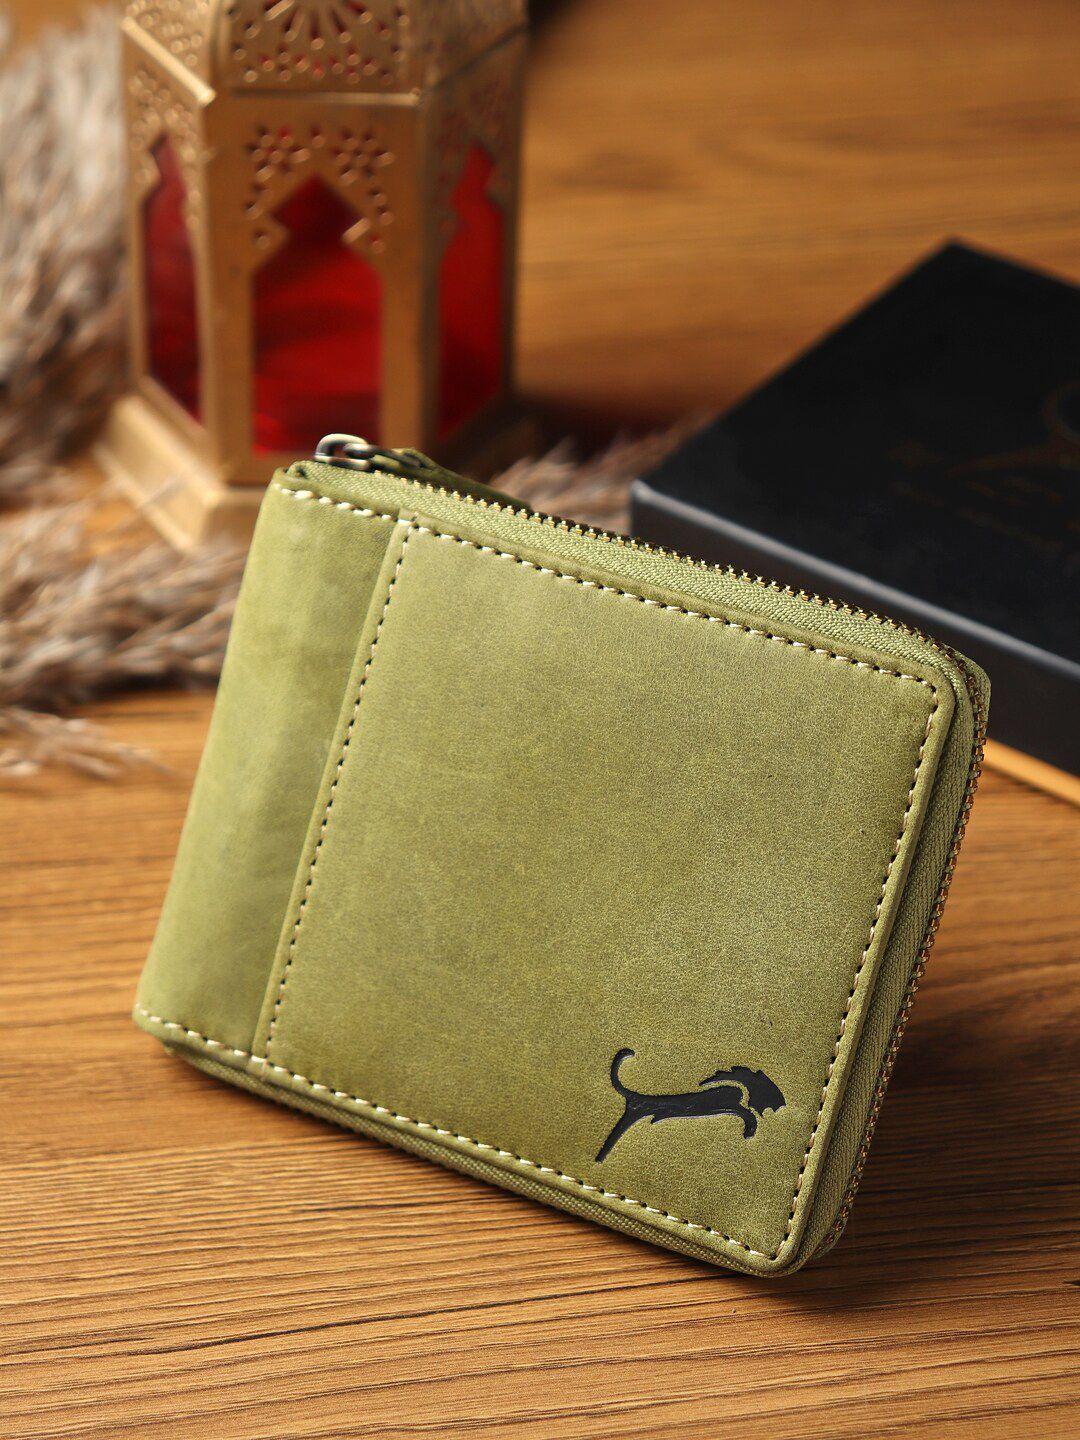 wild edge unisex olive green & black animal printed leather zip around wallet